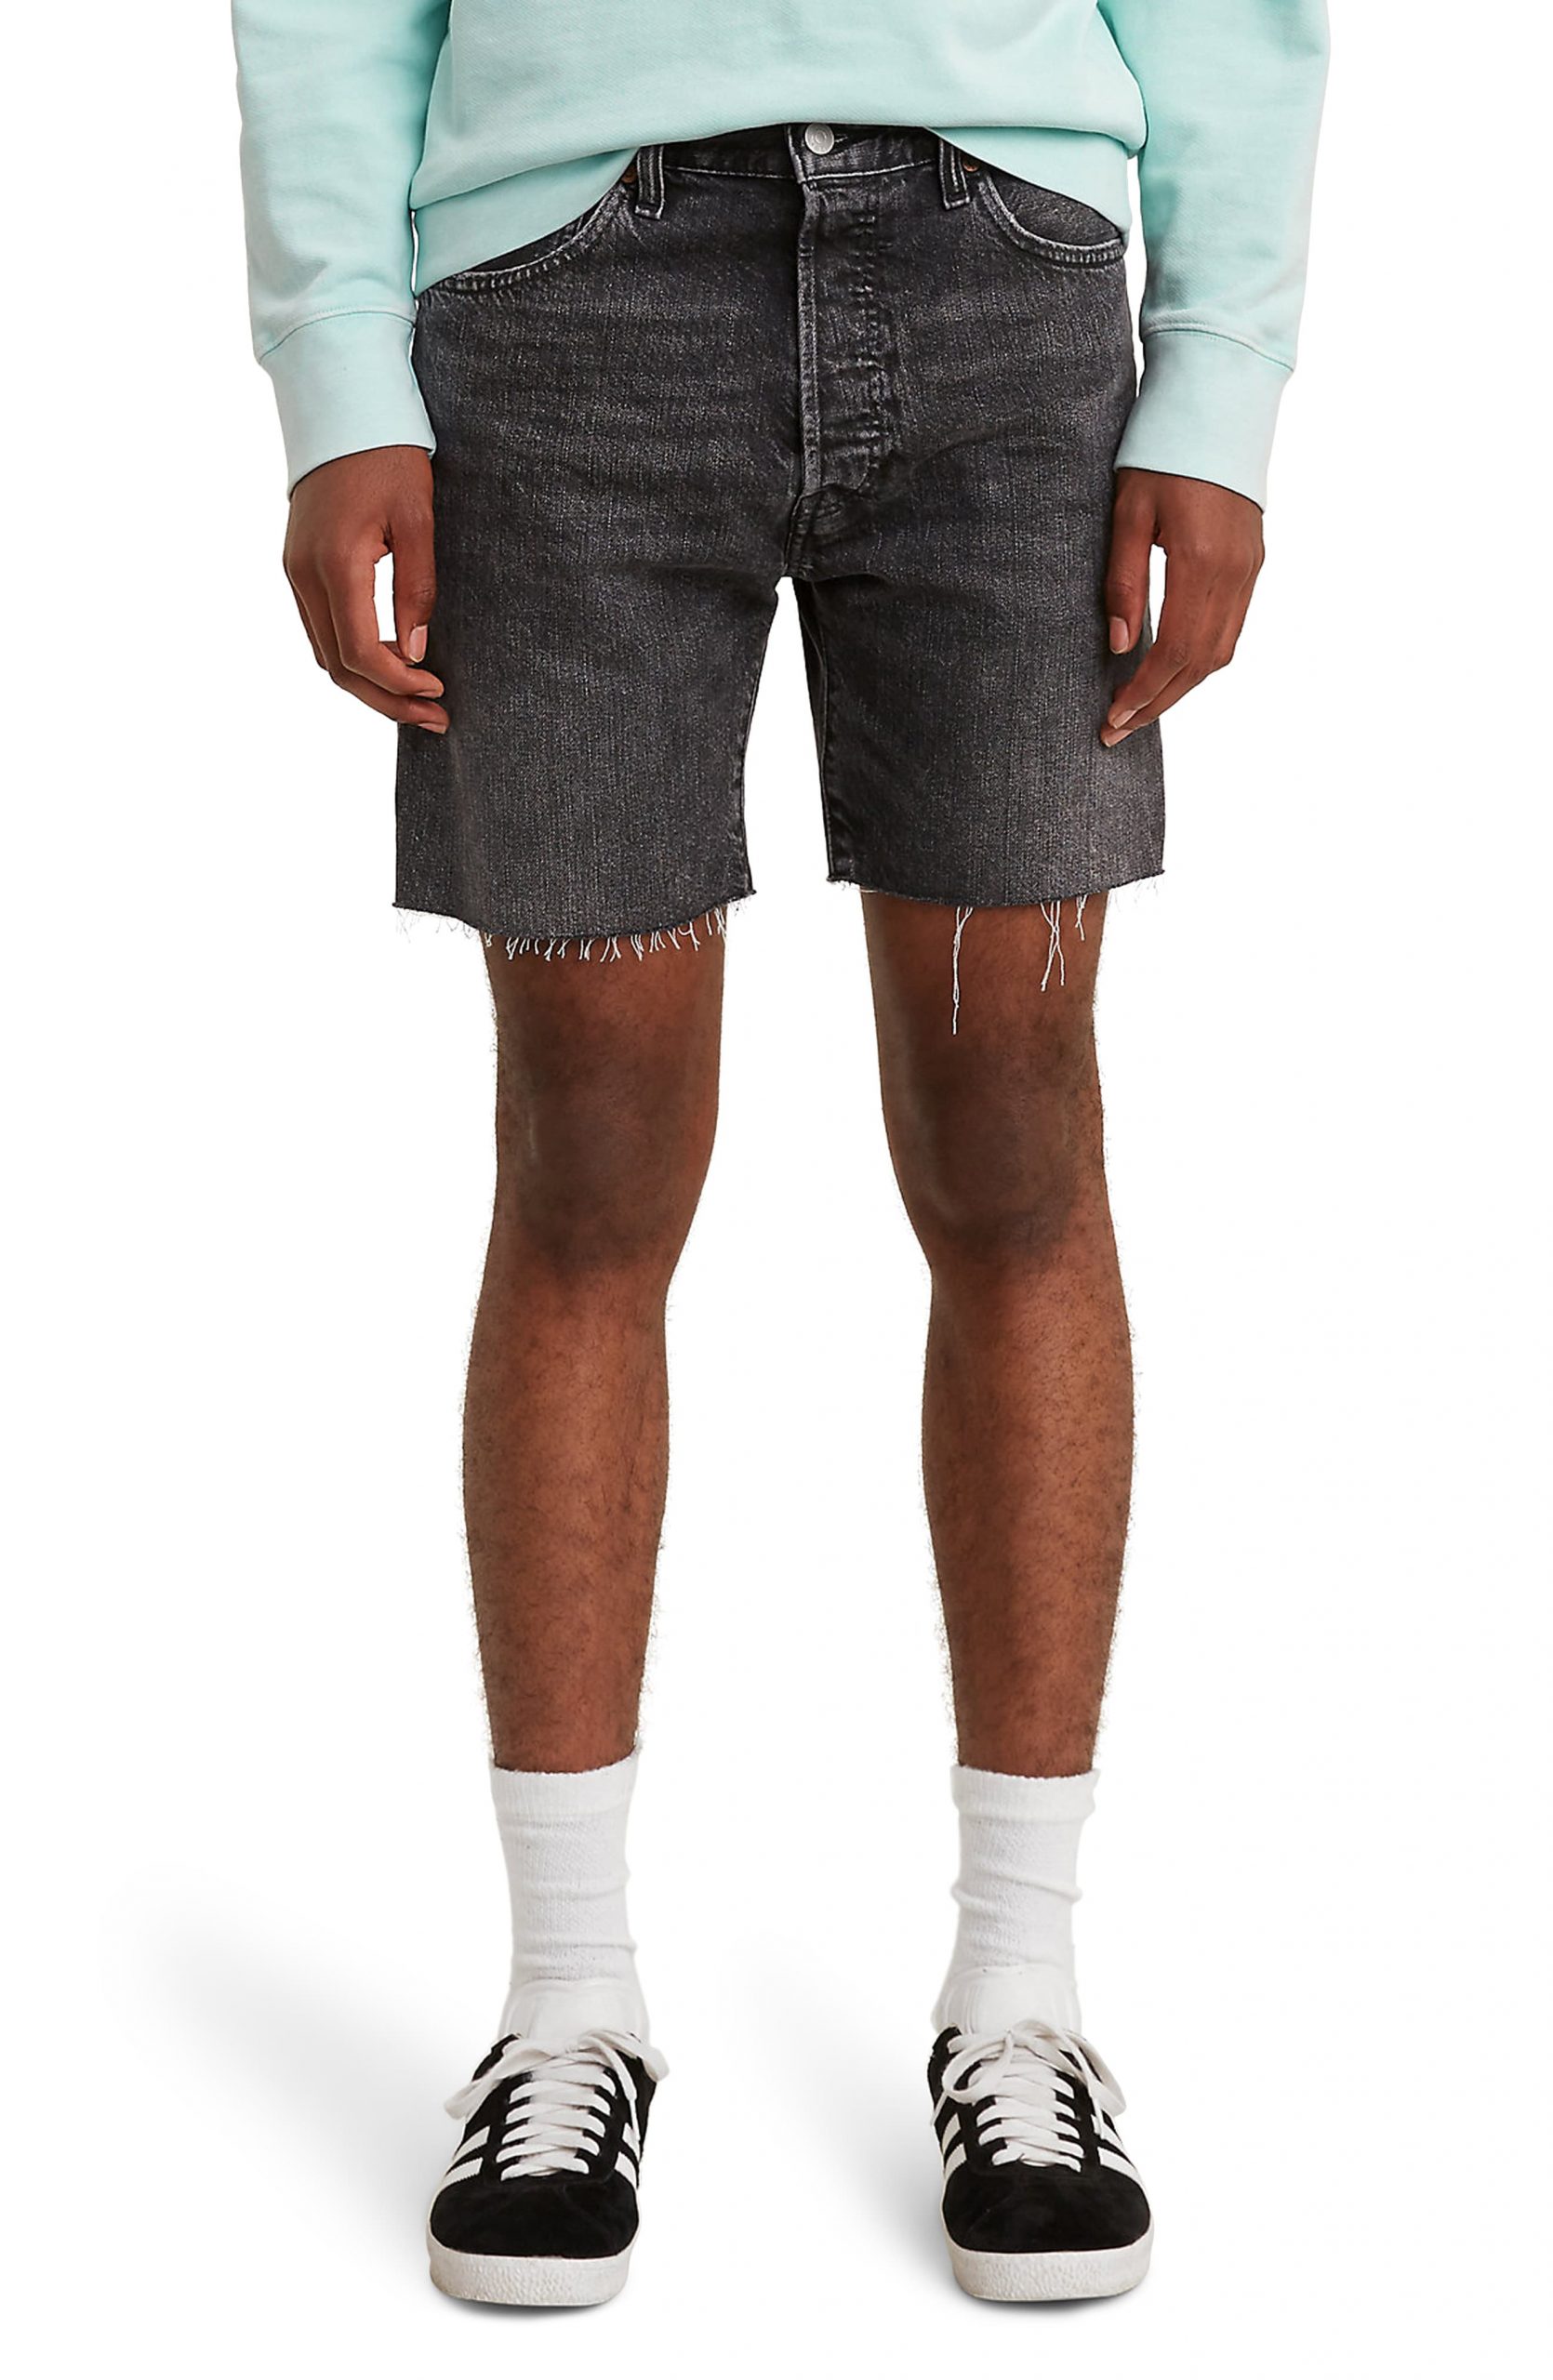 levi's jean shorts mens